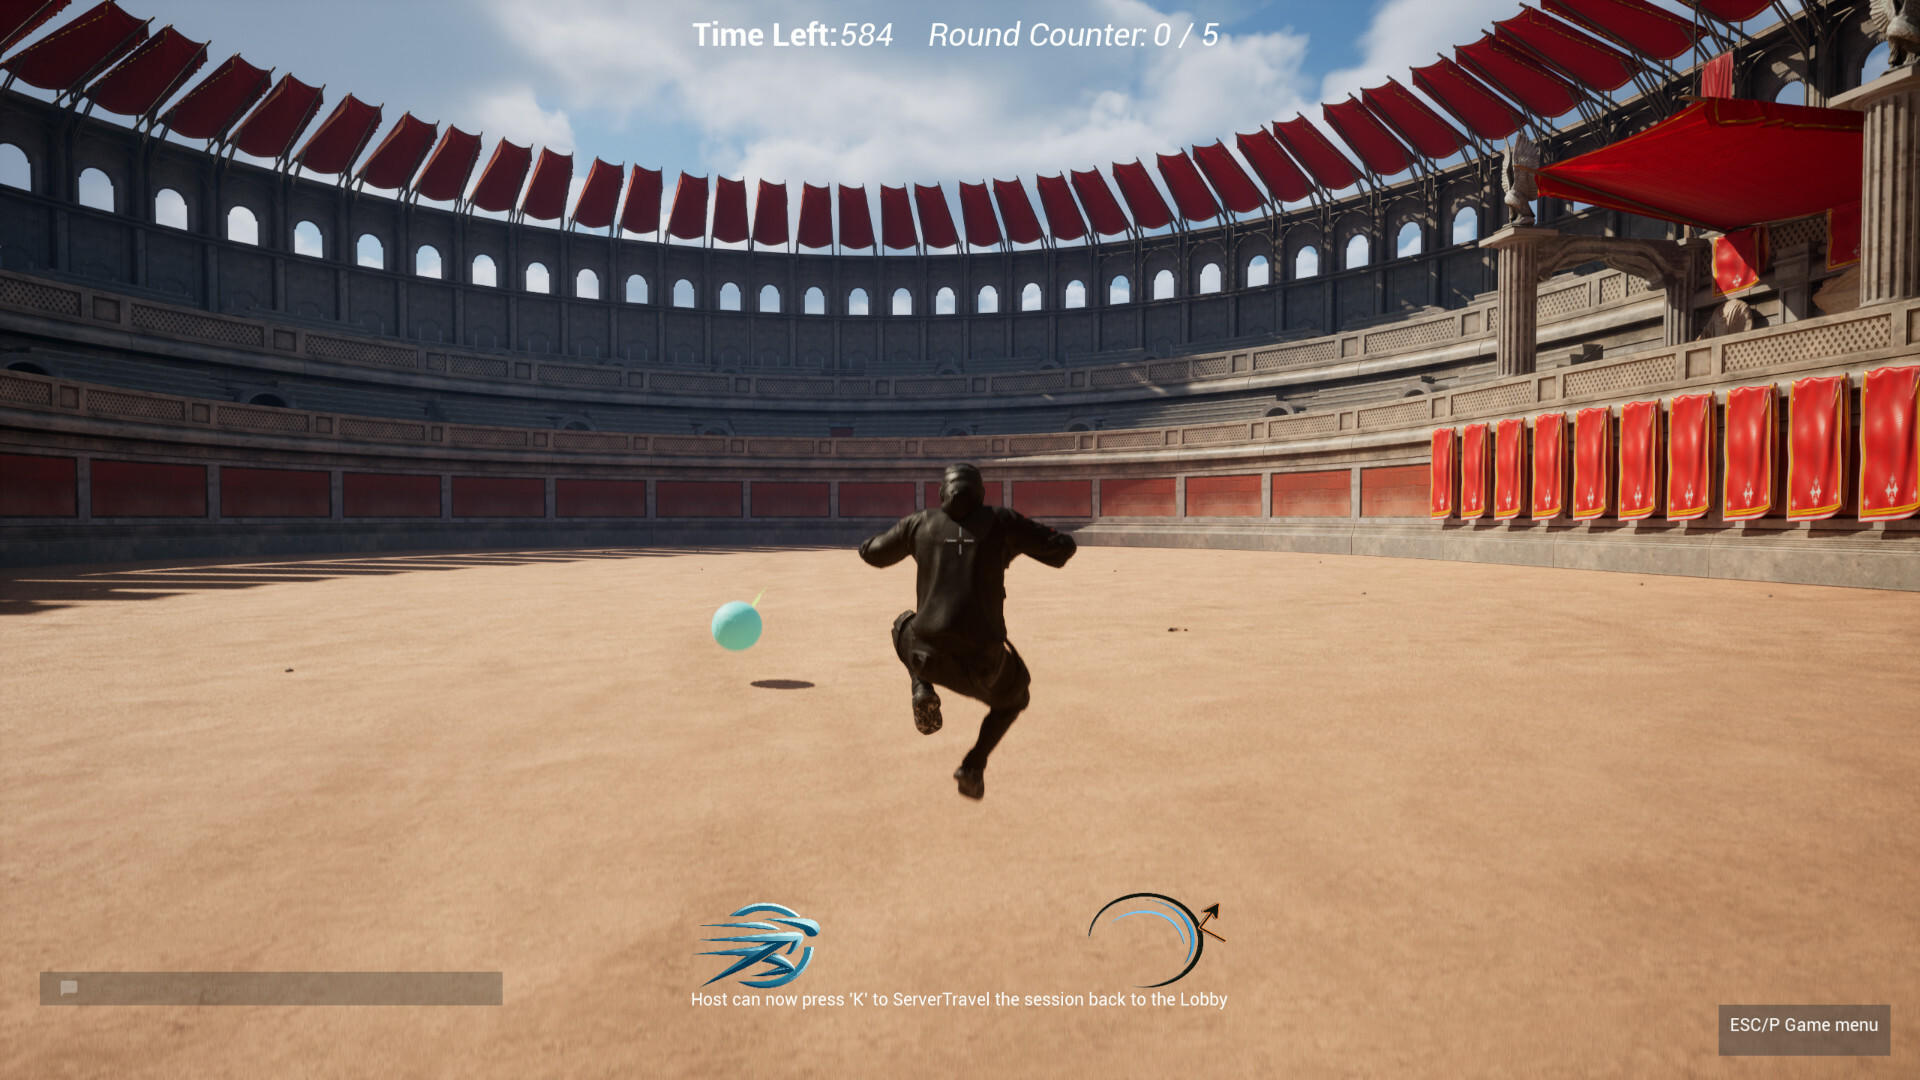 Ninja Ball screenshot game